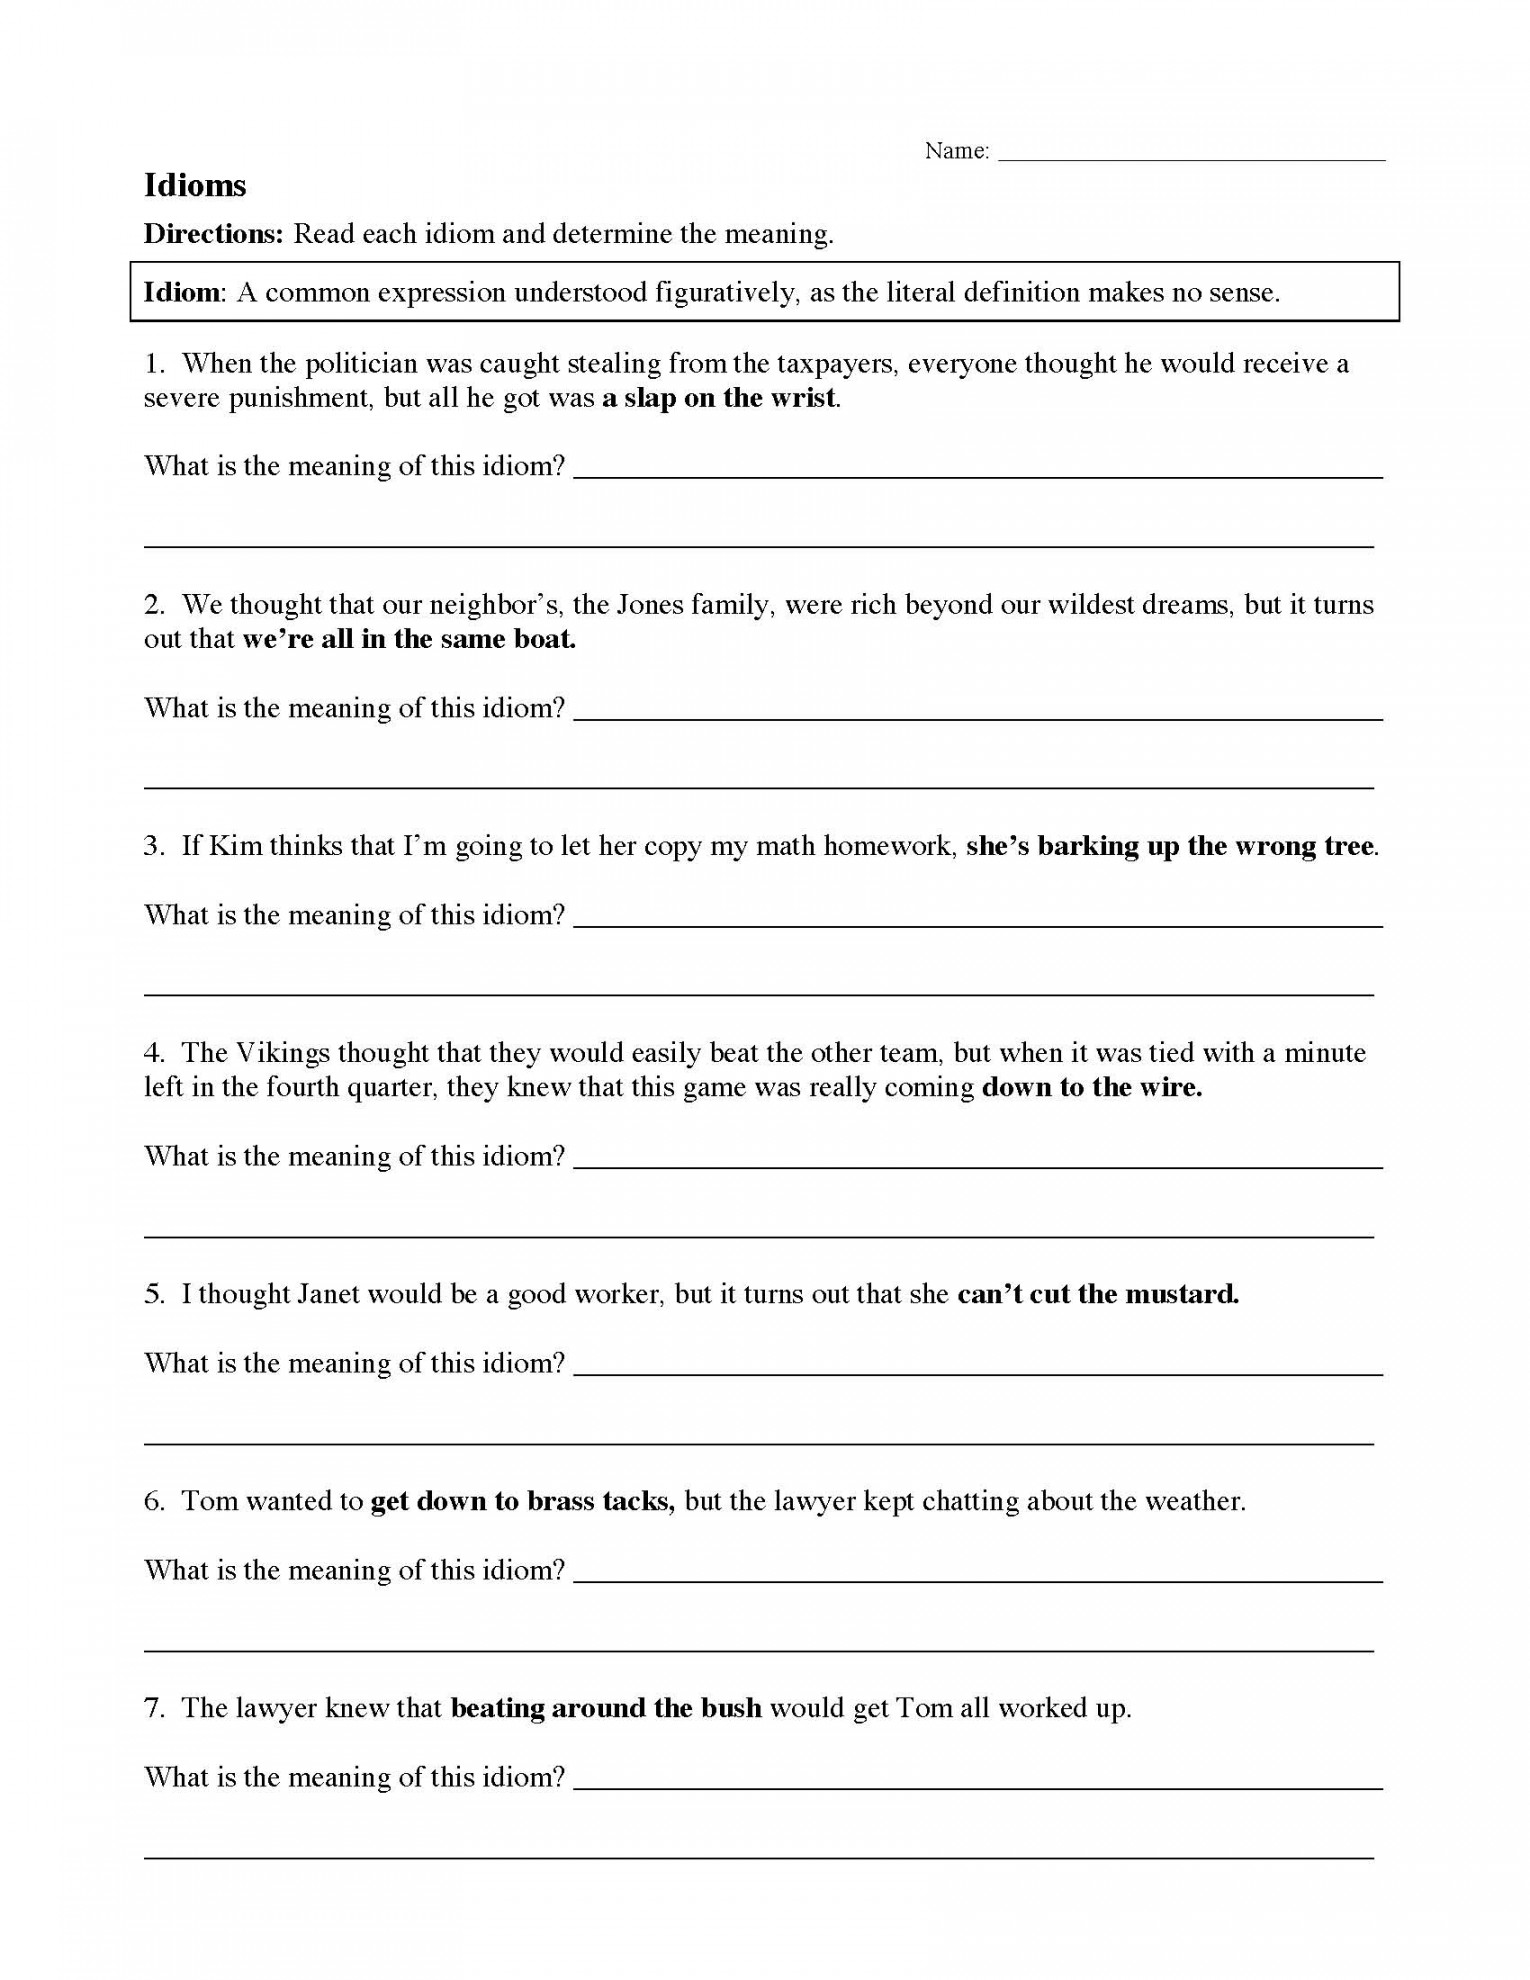 Idiom Worksheets & Tests  Figurative Language Activities